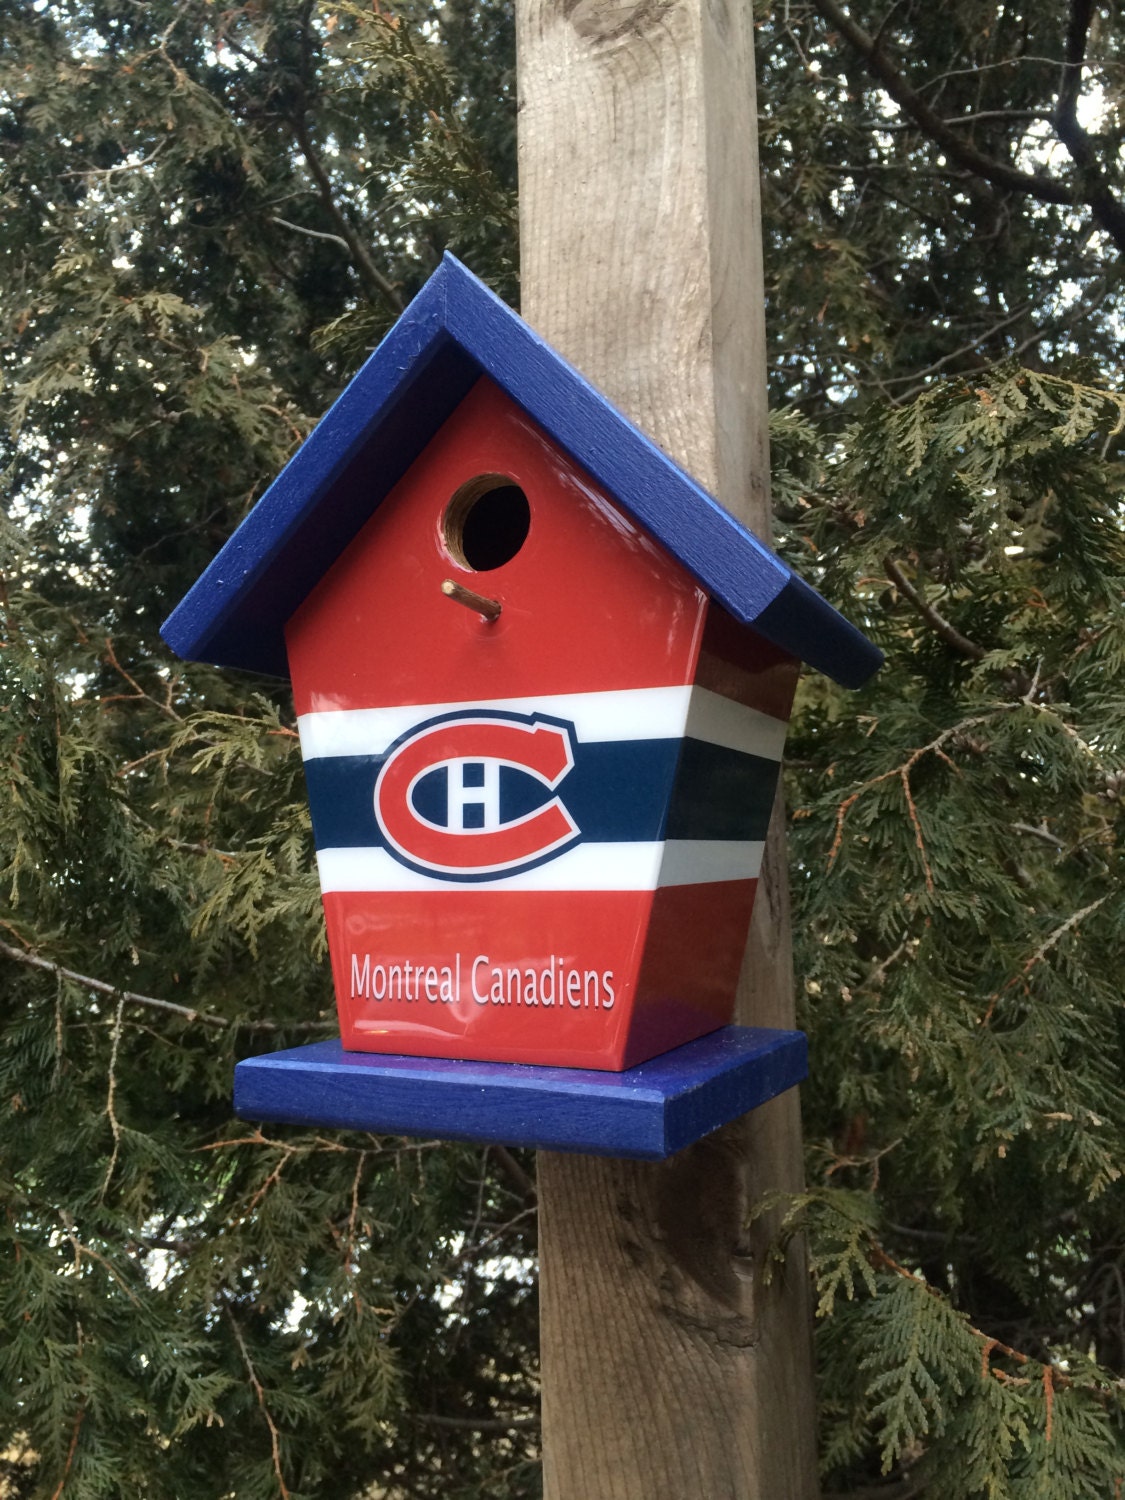 Montreal Canadiens (Blue Roof) Birdhouse/Feeder